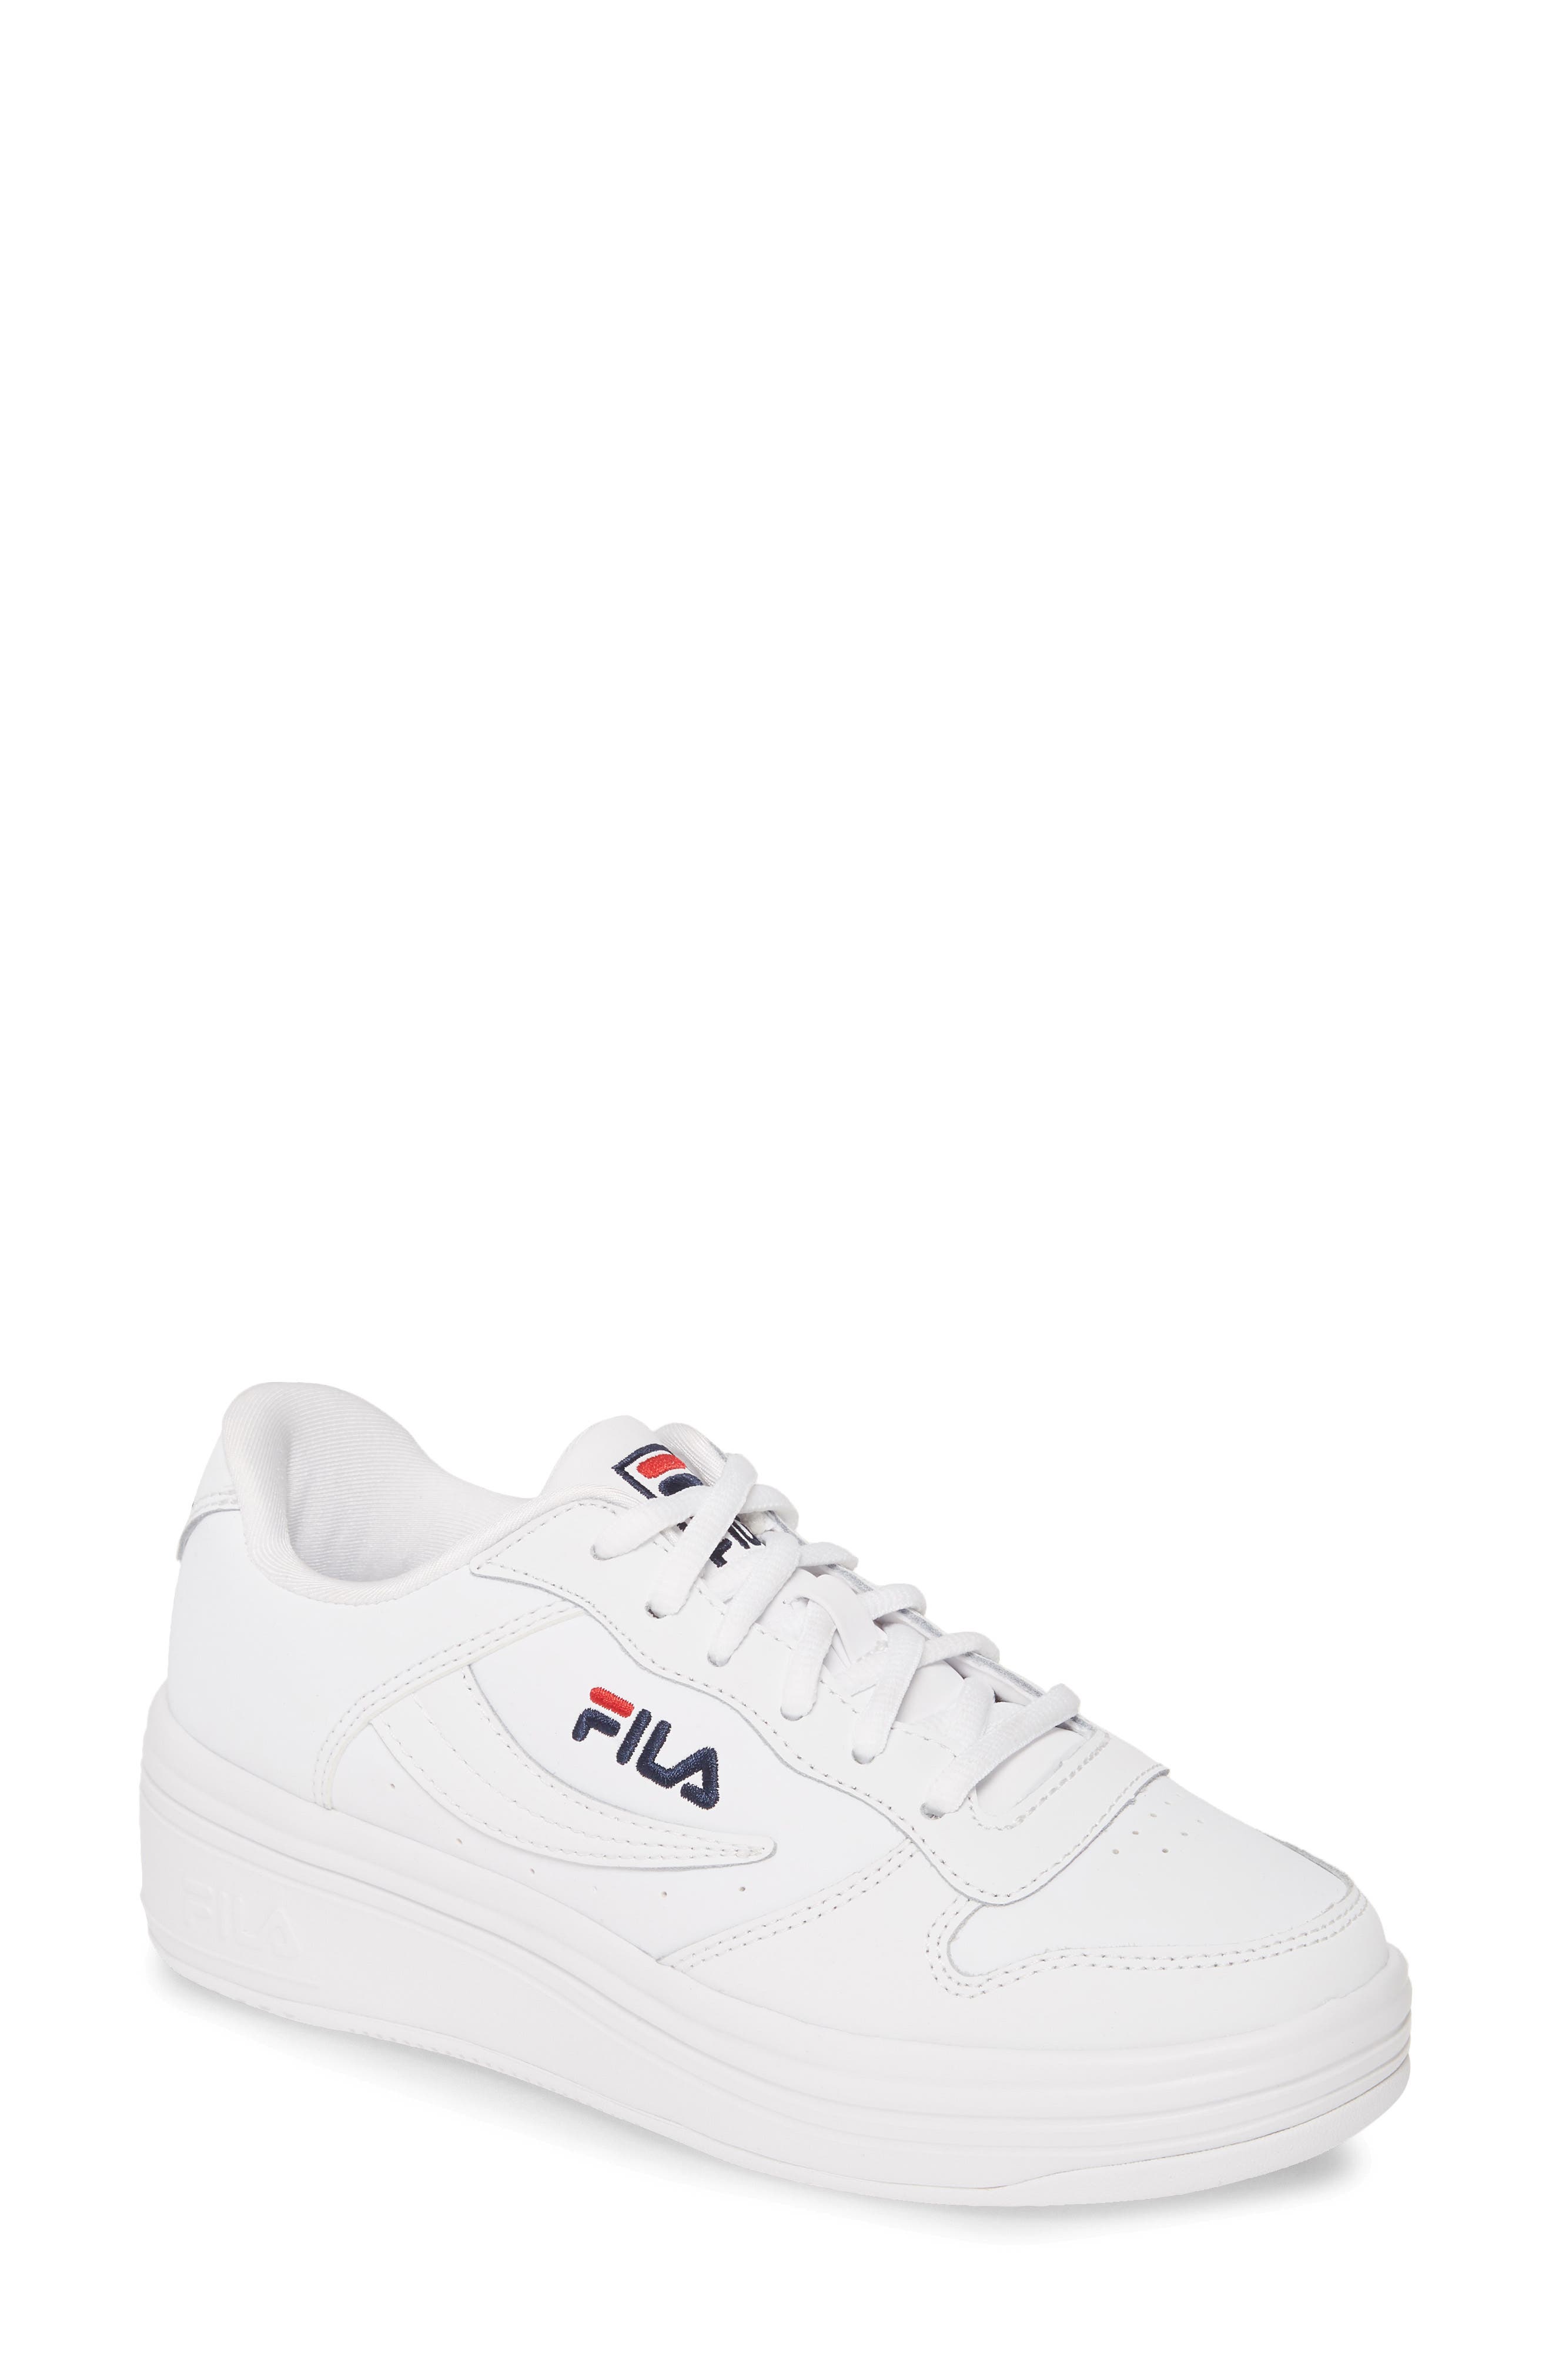 fila new white sneakers